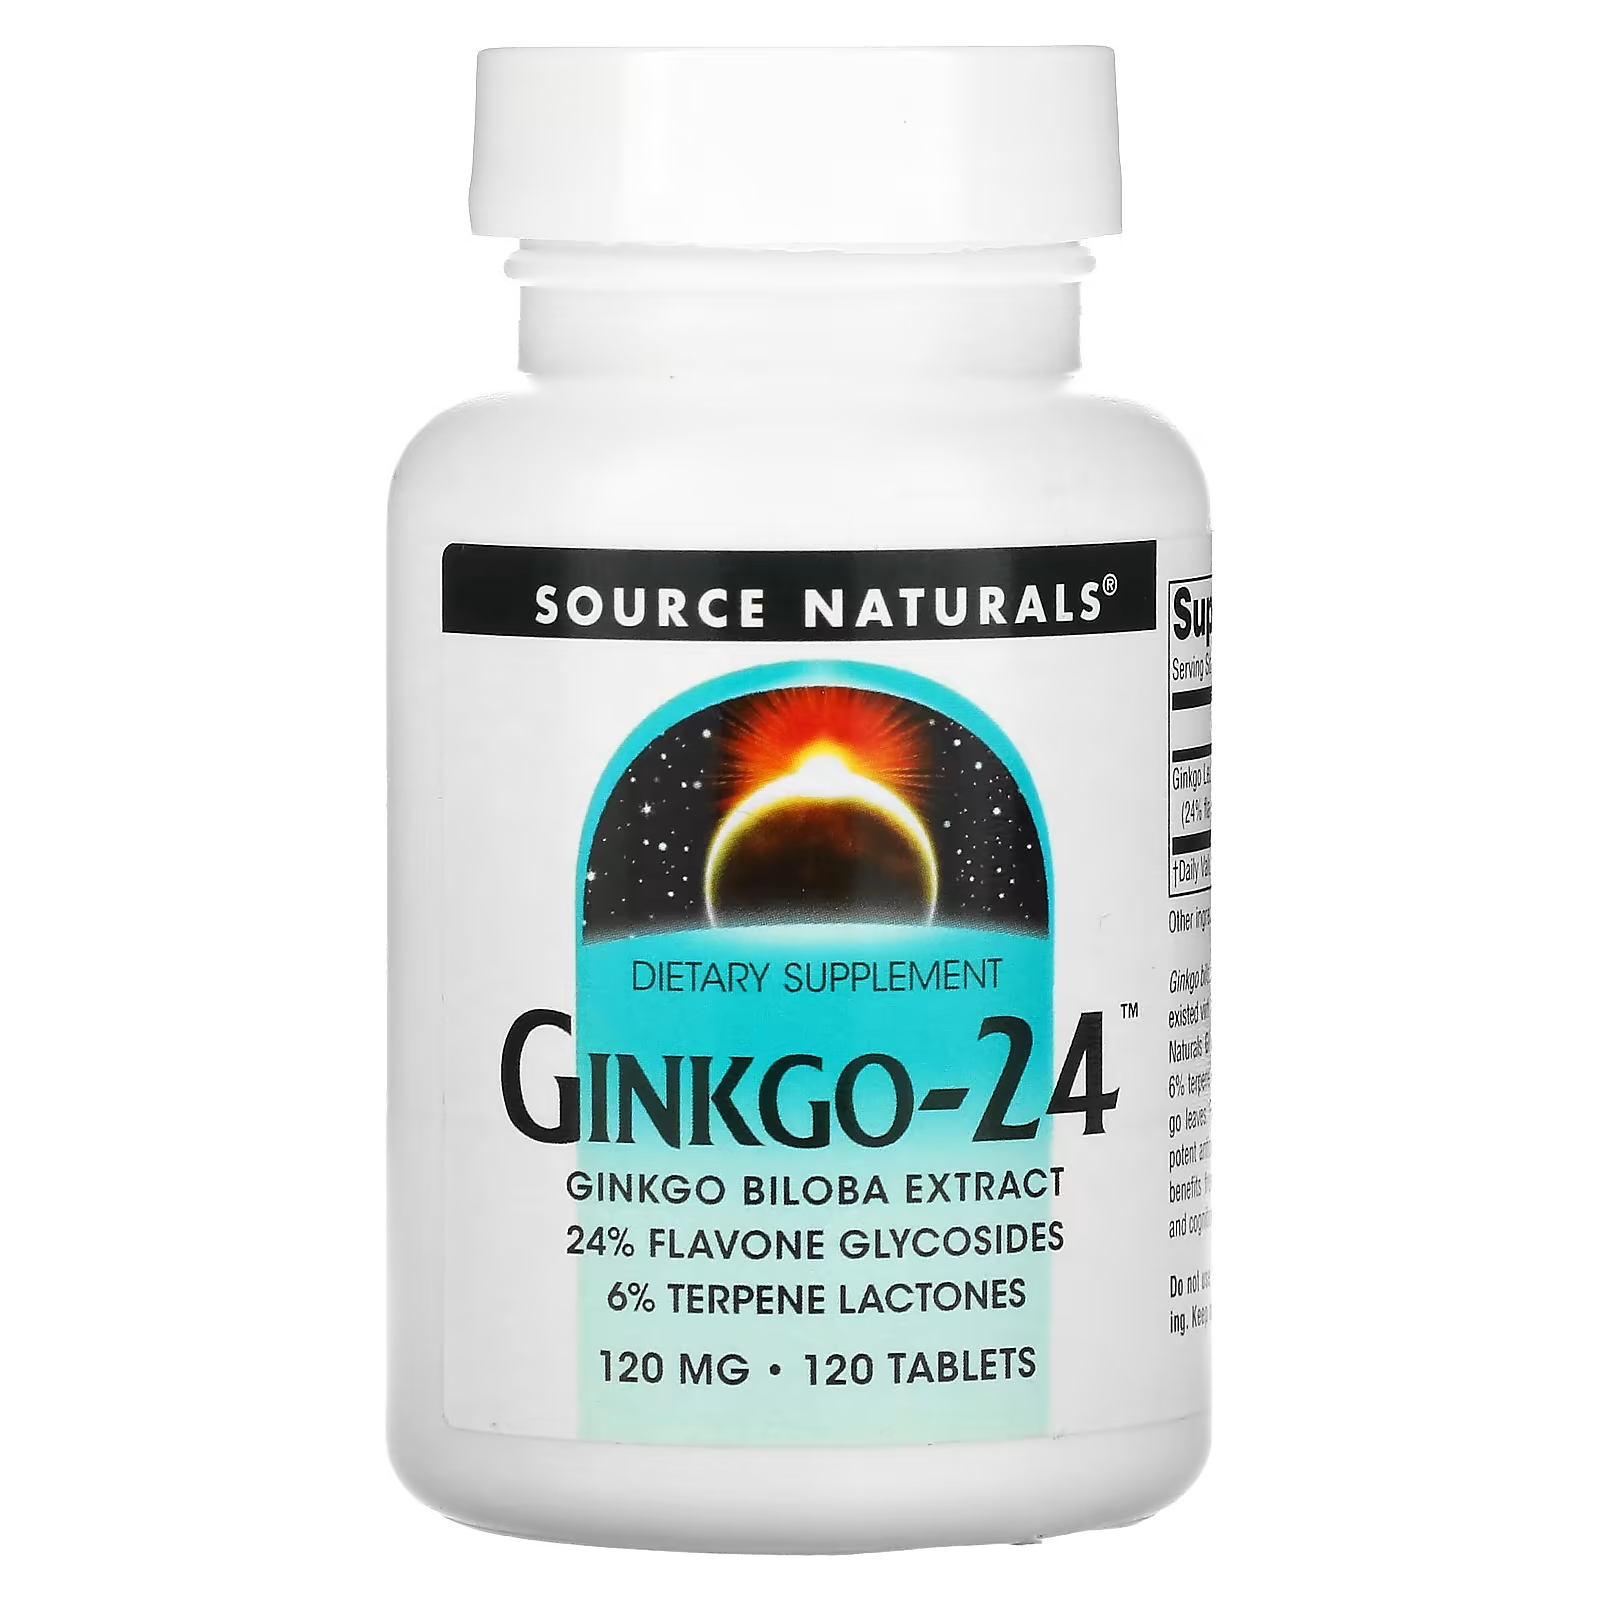 source naturals ginkgo 24 гинкго билоба 120 мг 120 таблеток Source Naturals Ginkgo-24 гинкго билоба,120 мг, 120 таблеток